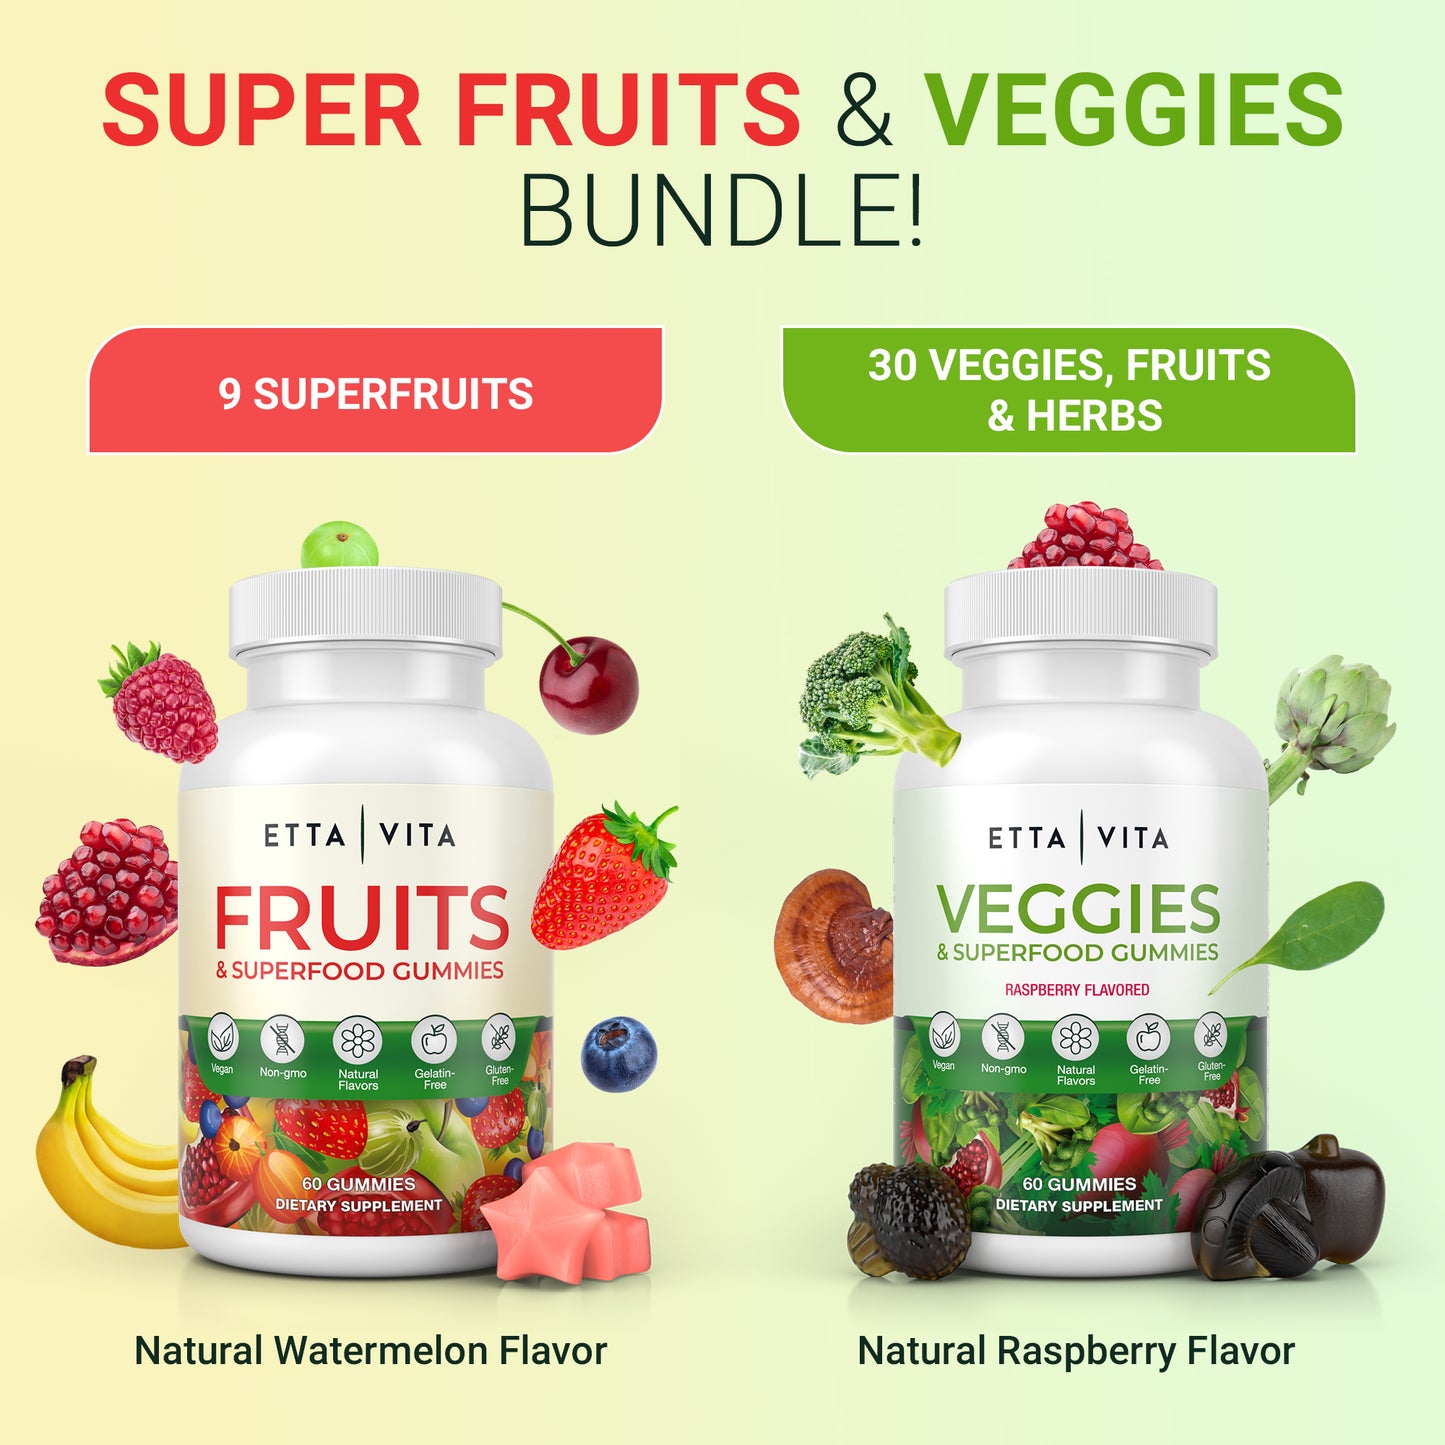 Fruits and Veggies Gummies Supplement